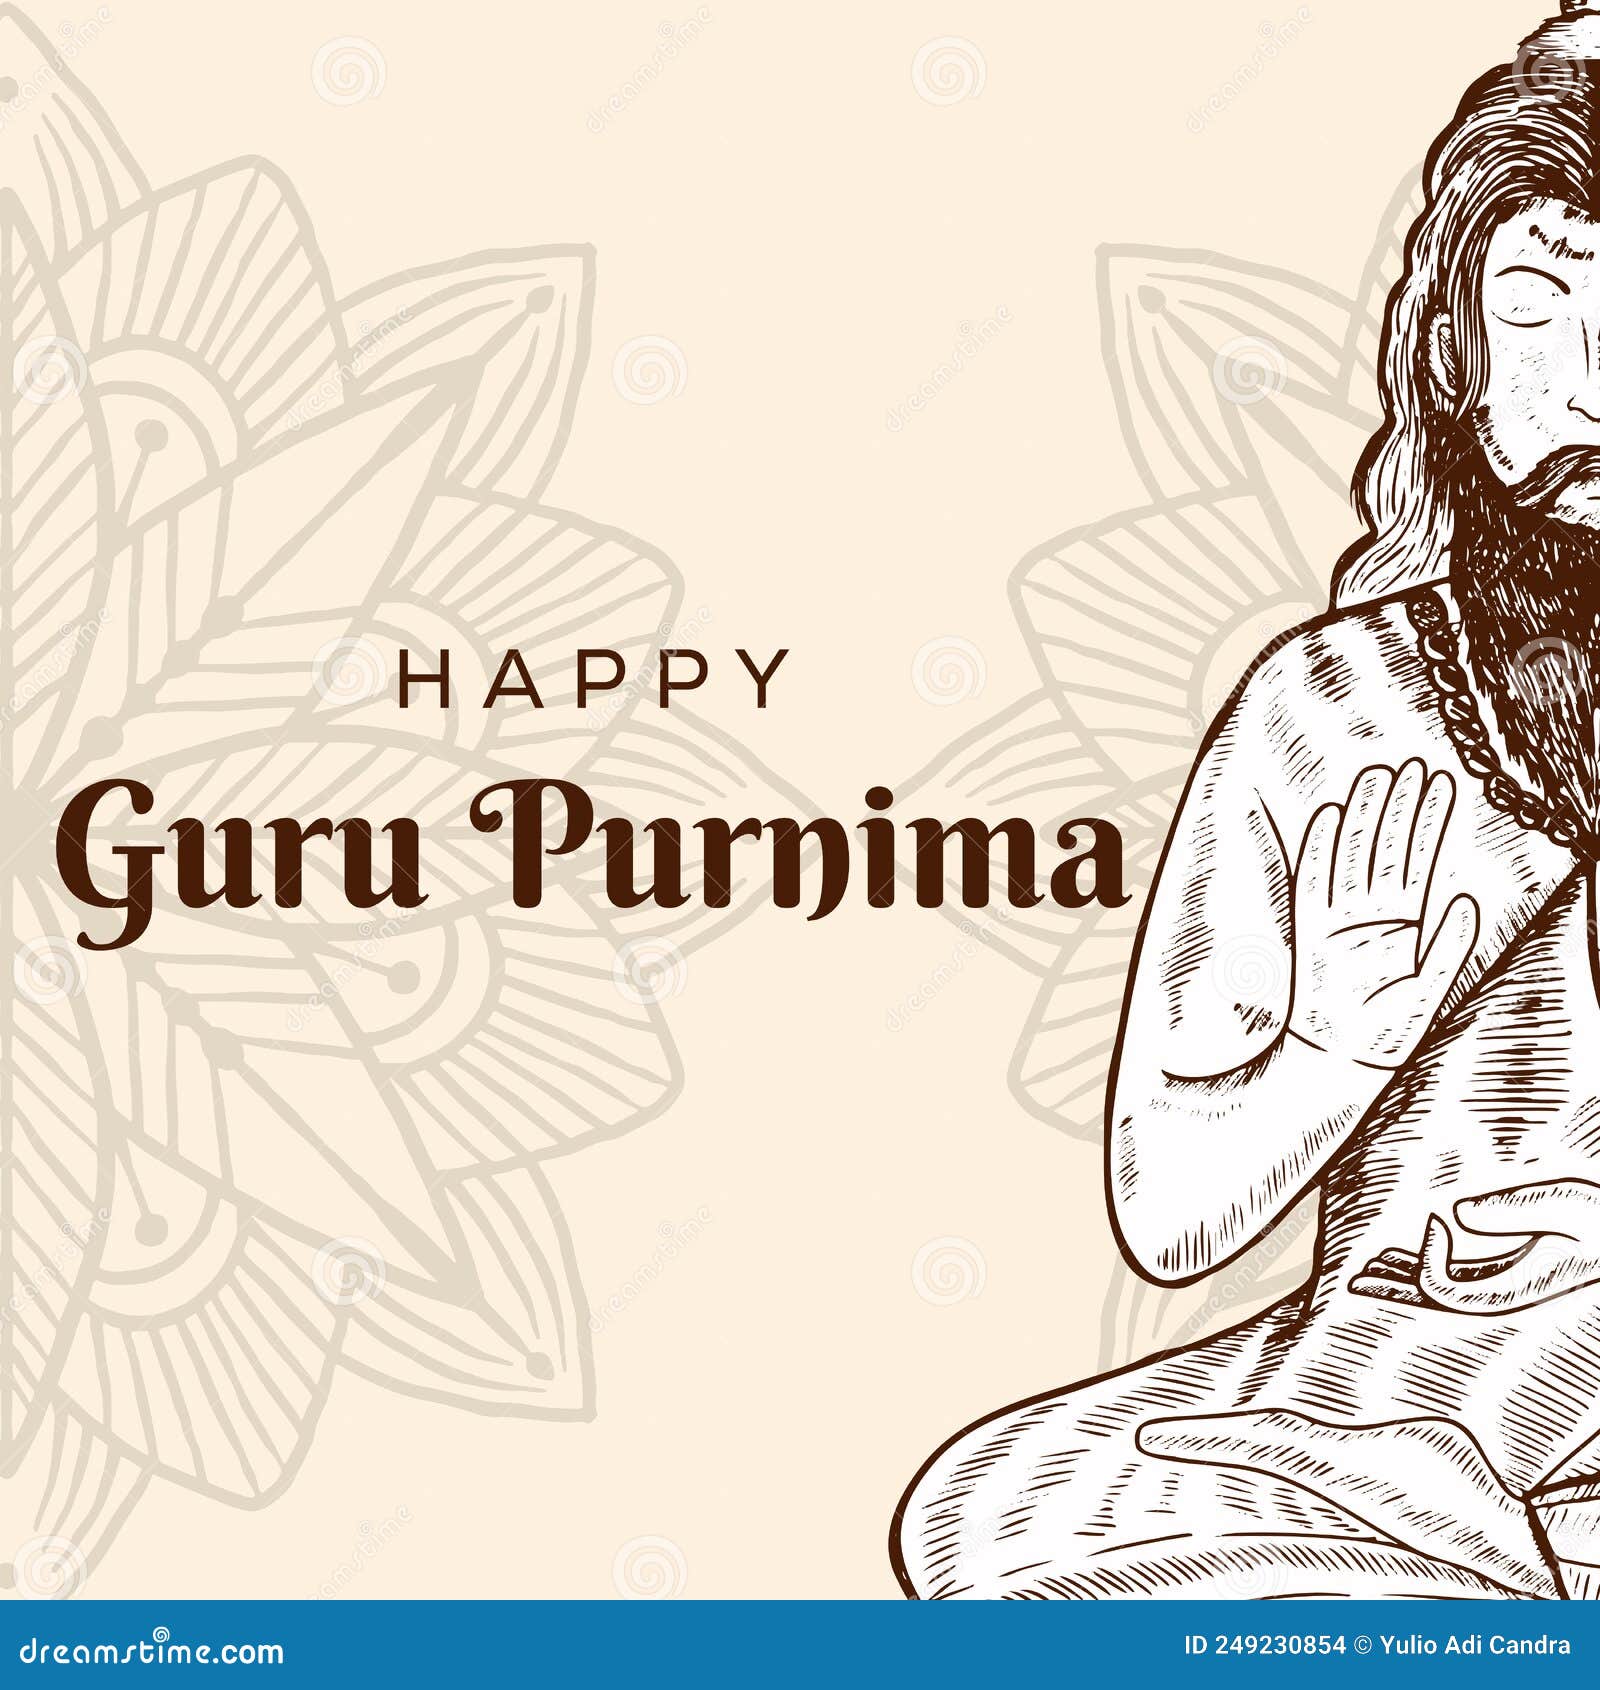 Guru purnima Easy Drawing for Beginners | Guru Purnima 2021 in India | Guru  Purnima Drawing | Easy drawings, Drawing for beginners, Easy drawings for  beginners